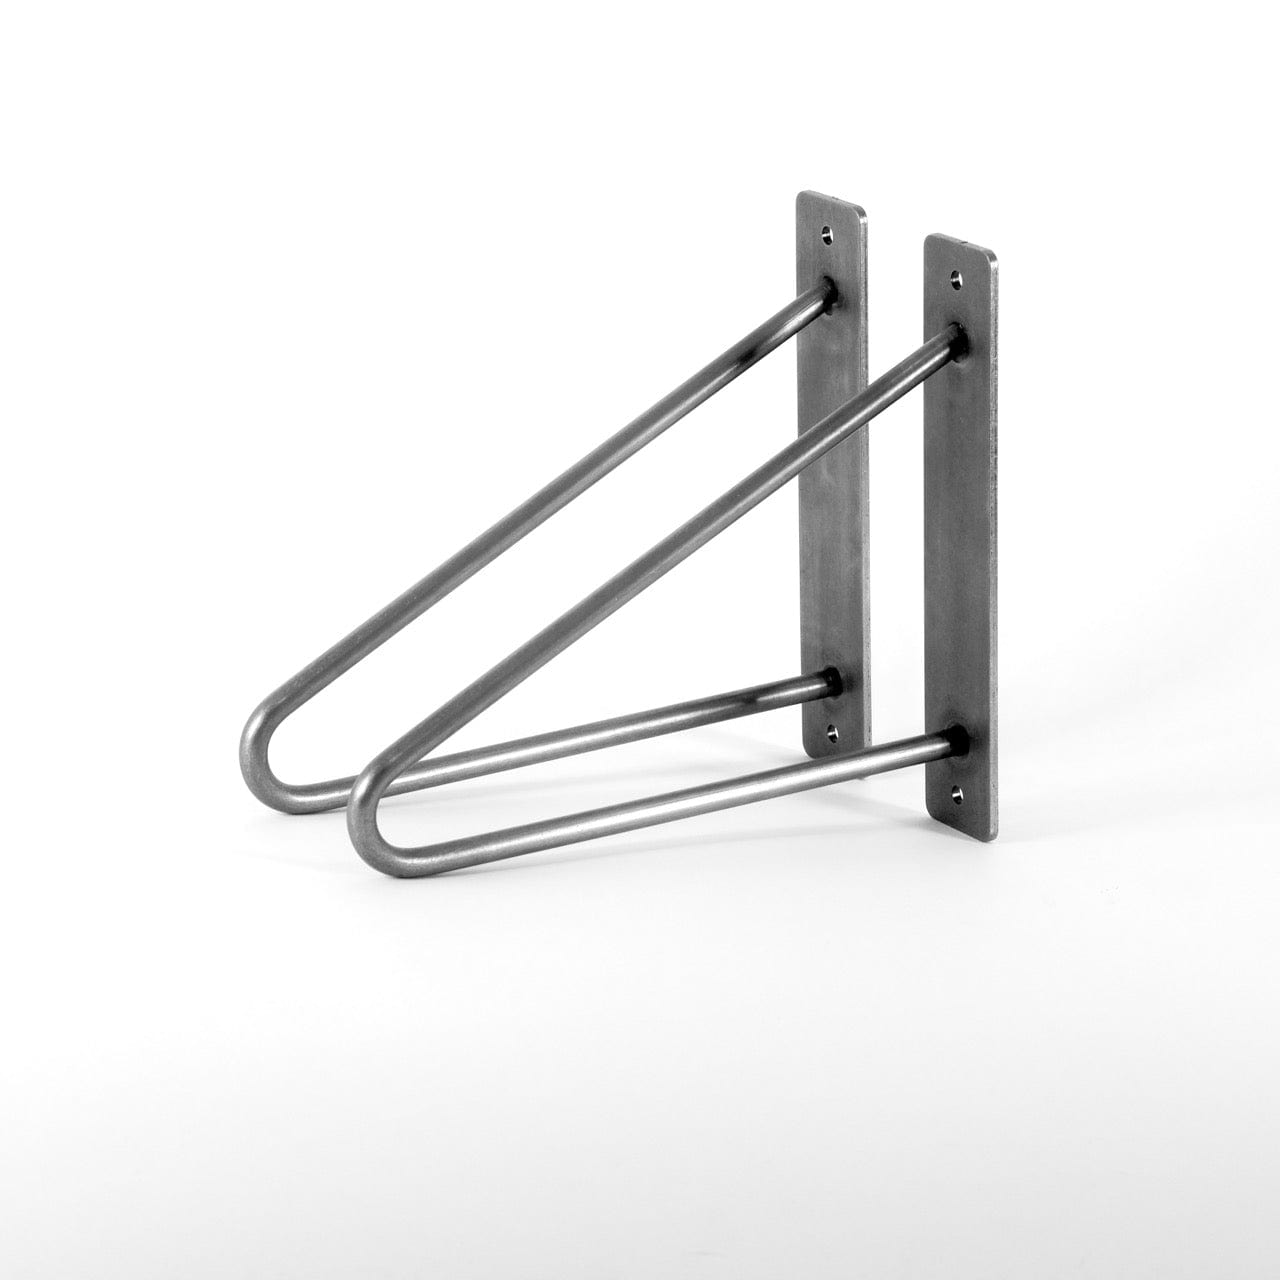 Pair of unfinished steel 2 rod hairpin shelf bracket